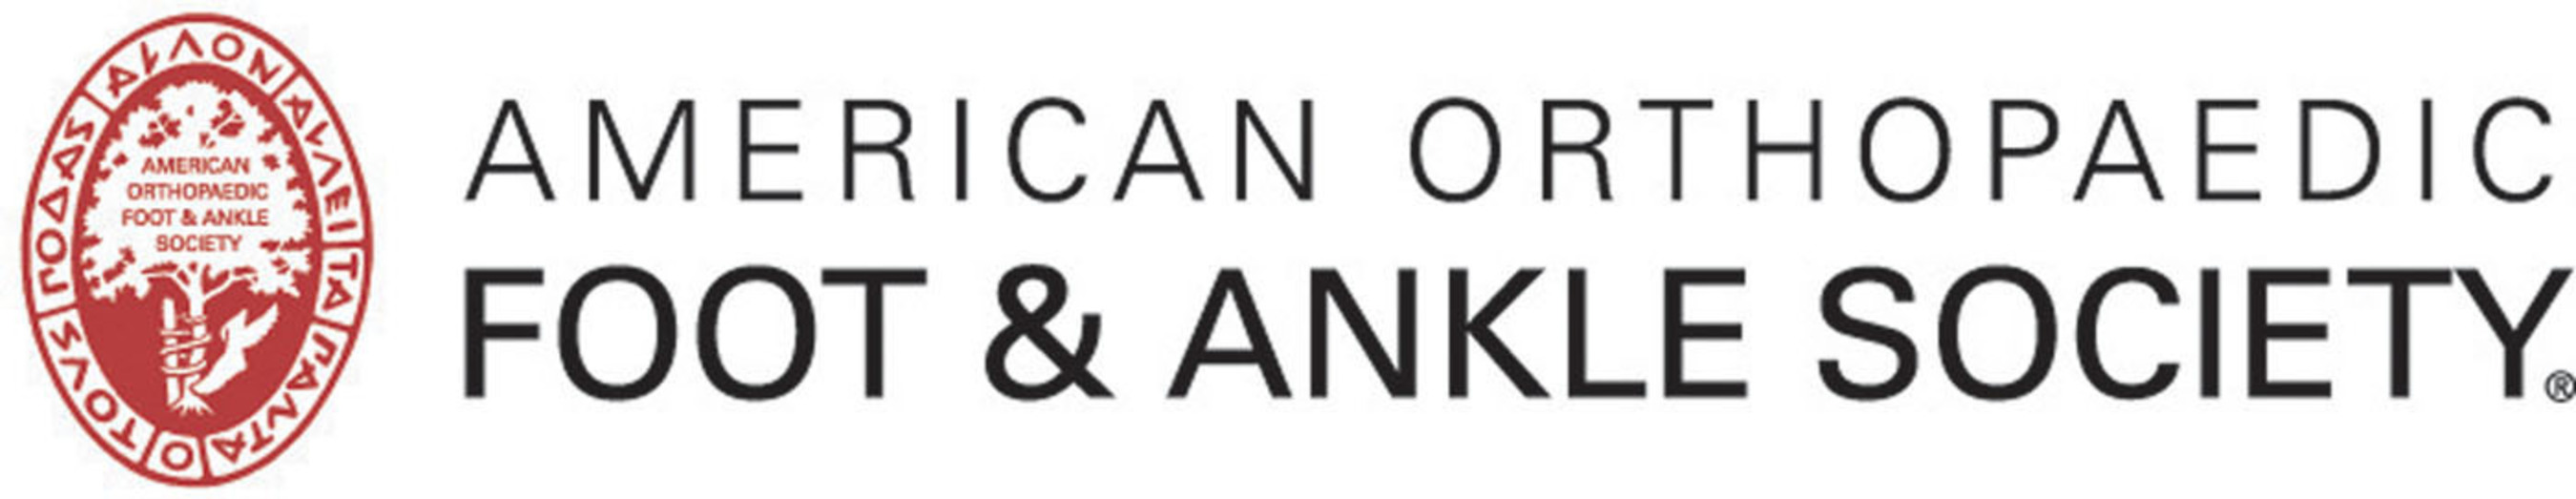 American Orthopaedic Foot & Ankle Society logo. (PRNewsFoto/American Orthopaedic Foot & Ankle Society) (PRNewsFoto/)